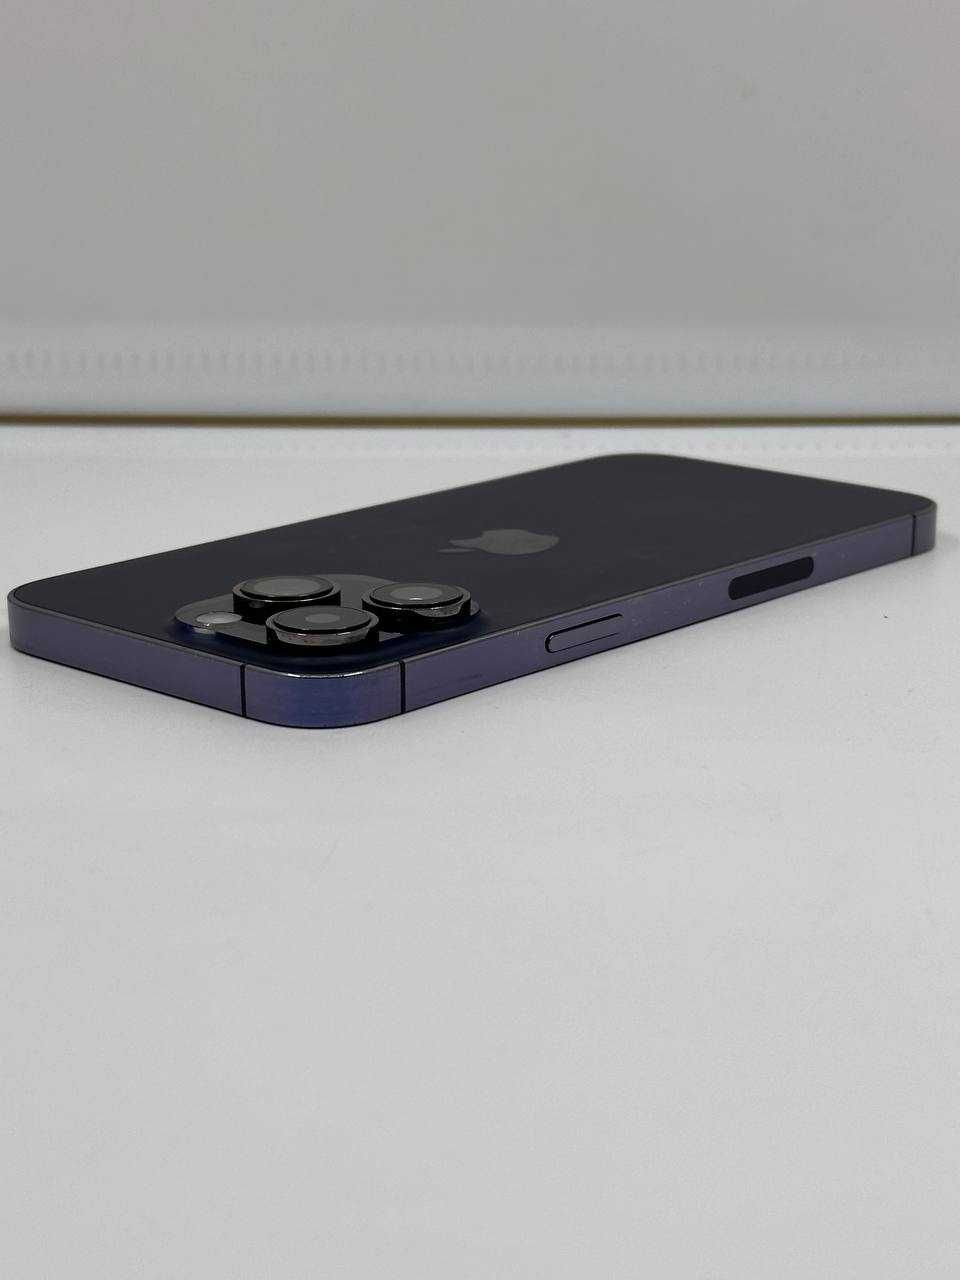 iPhone 14 Pro Max 256Gb Deep Purple Neverlock ГАРАНТИЯ 6 Месяцев